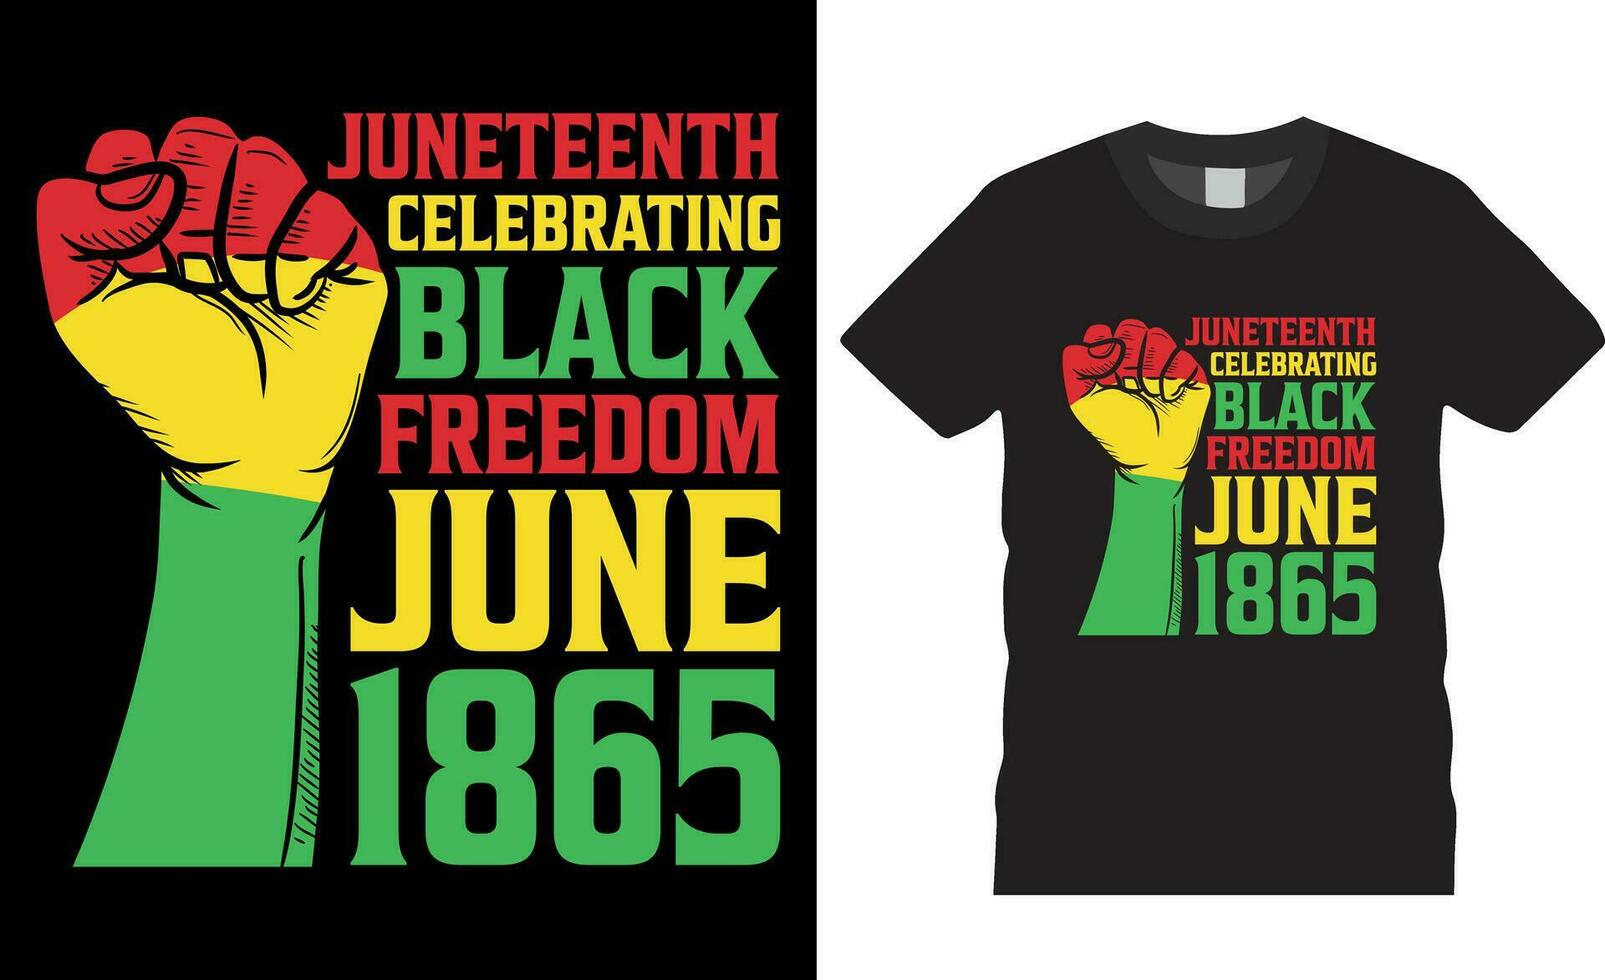 Juneteenth celebrating black freedom june 19-1865 t-shirt design Vector illustration.